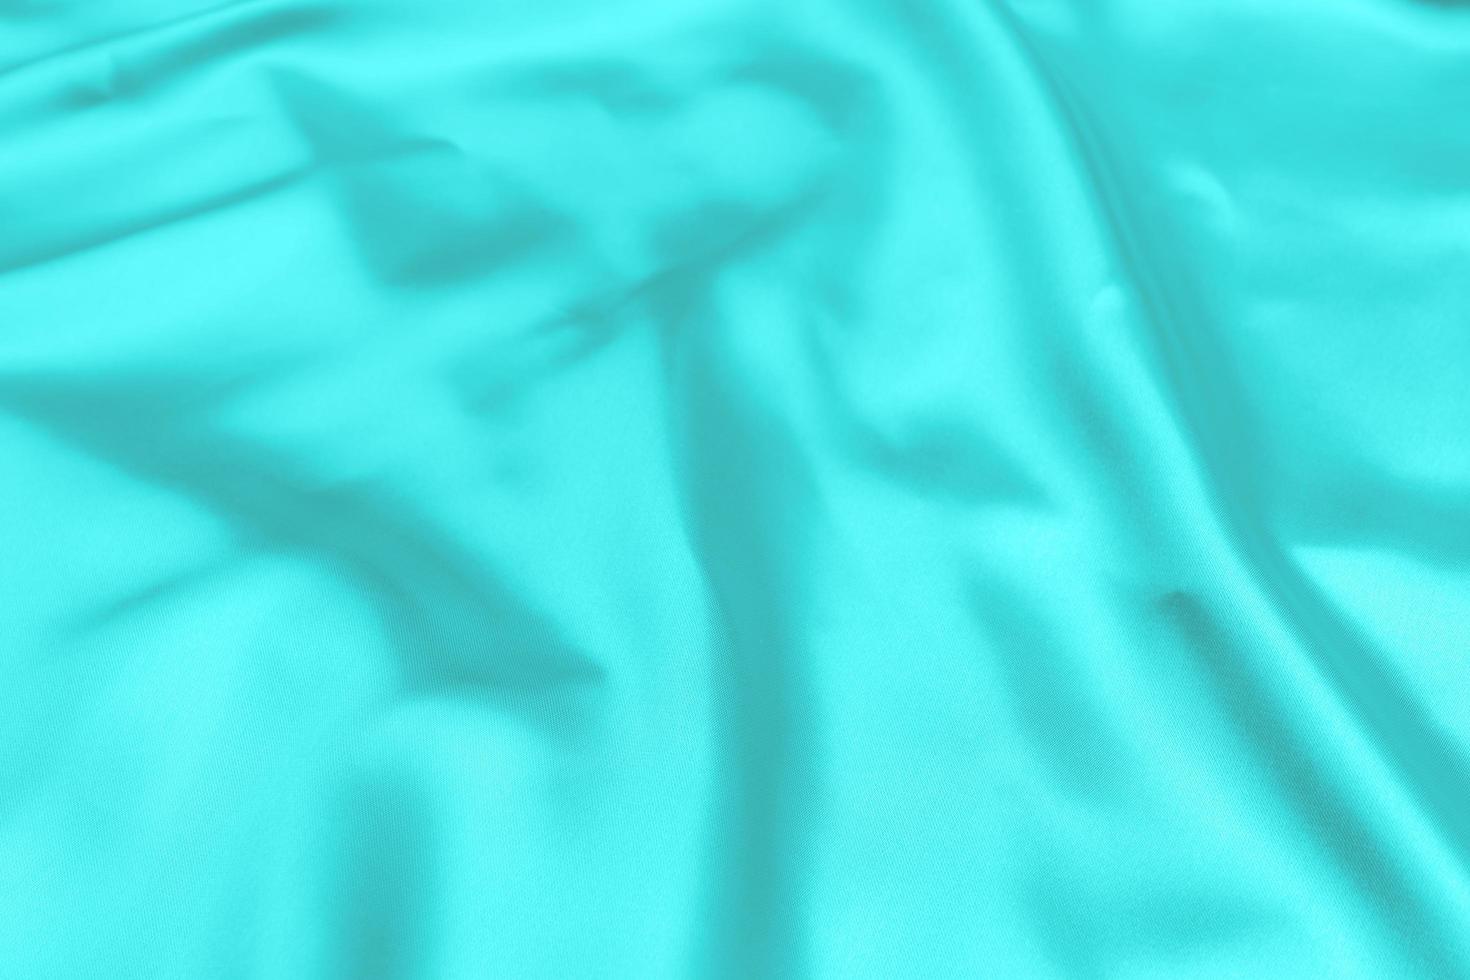 Cyan-Teal satin fabric texture soft blur background photo